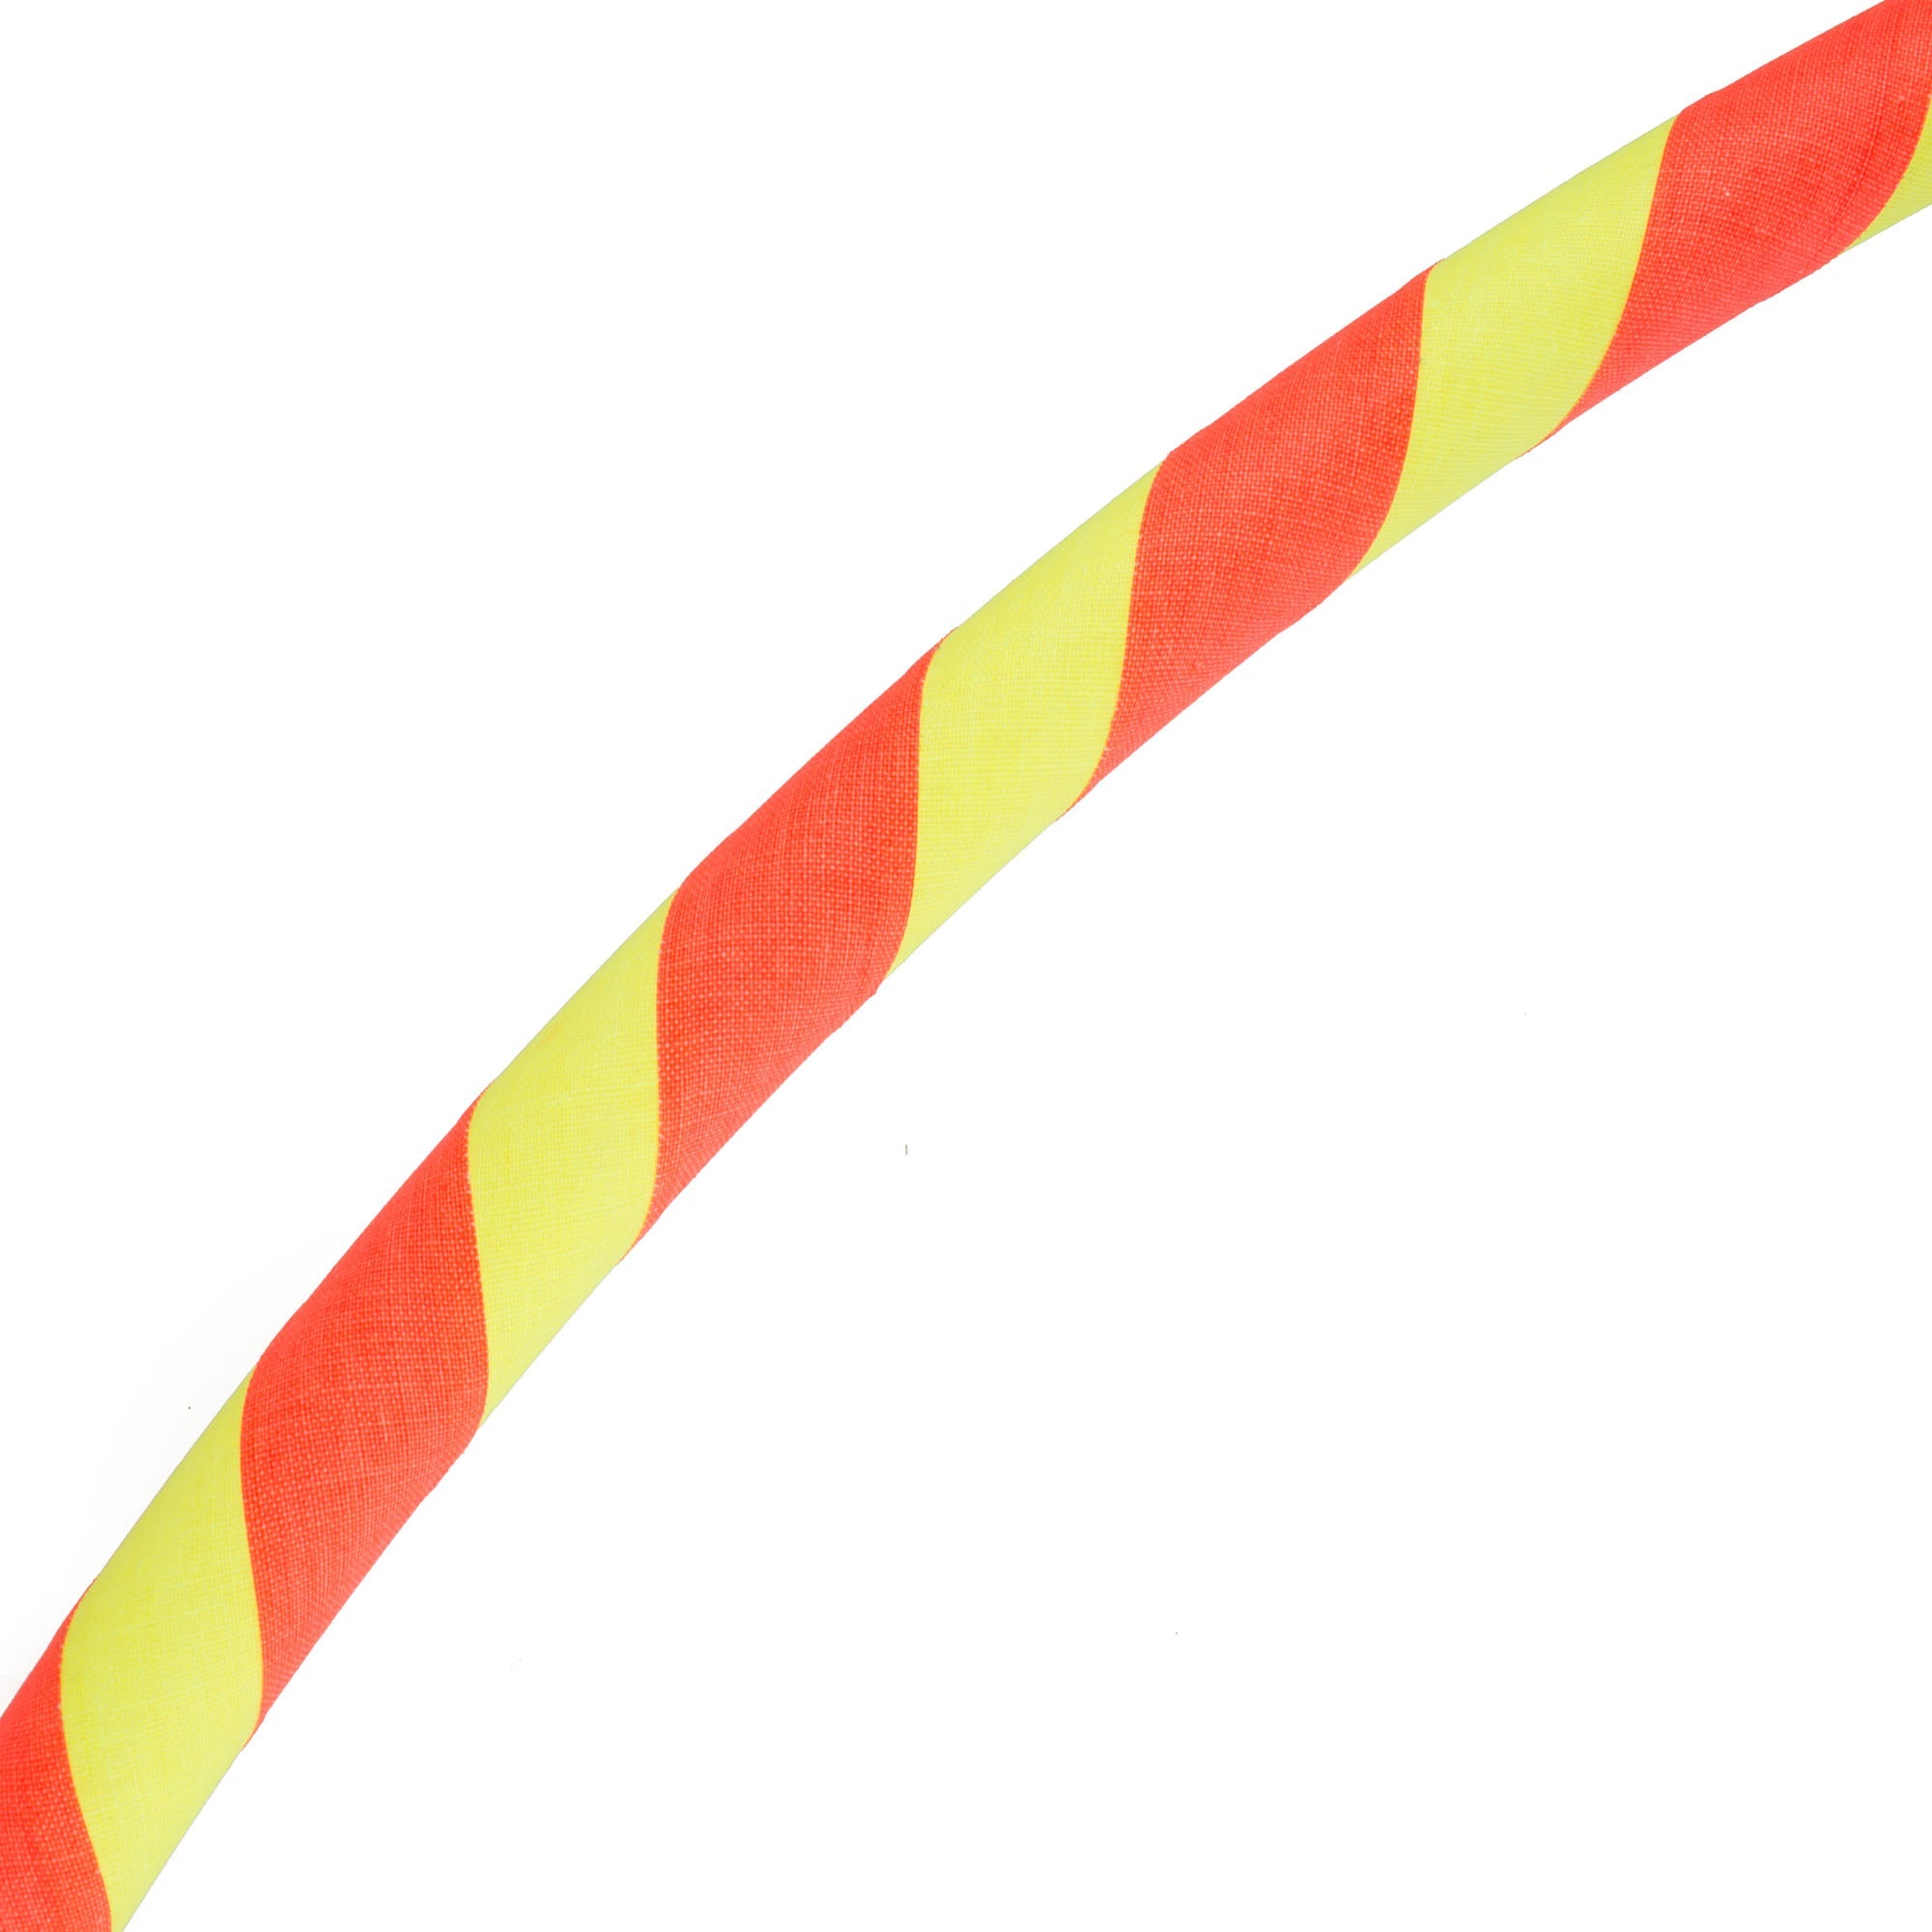 close up of yellow/orange tape